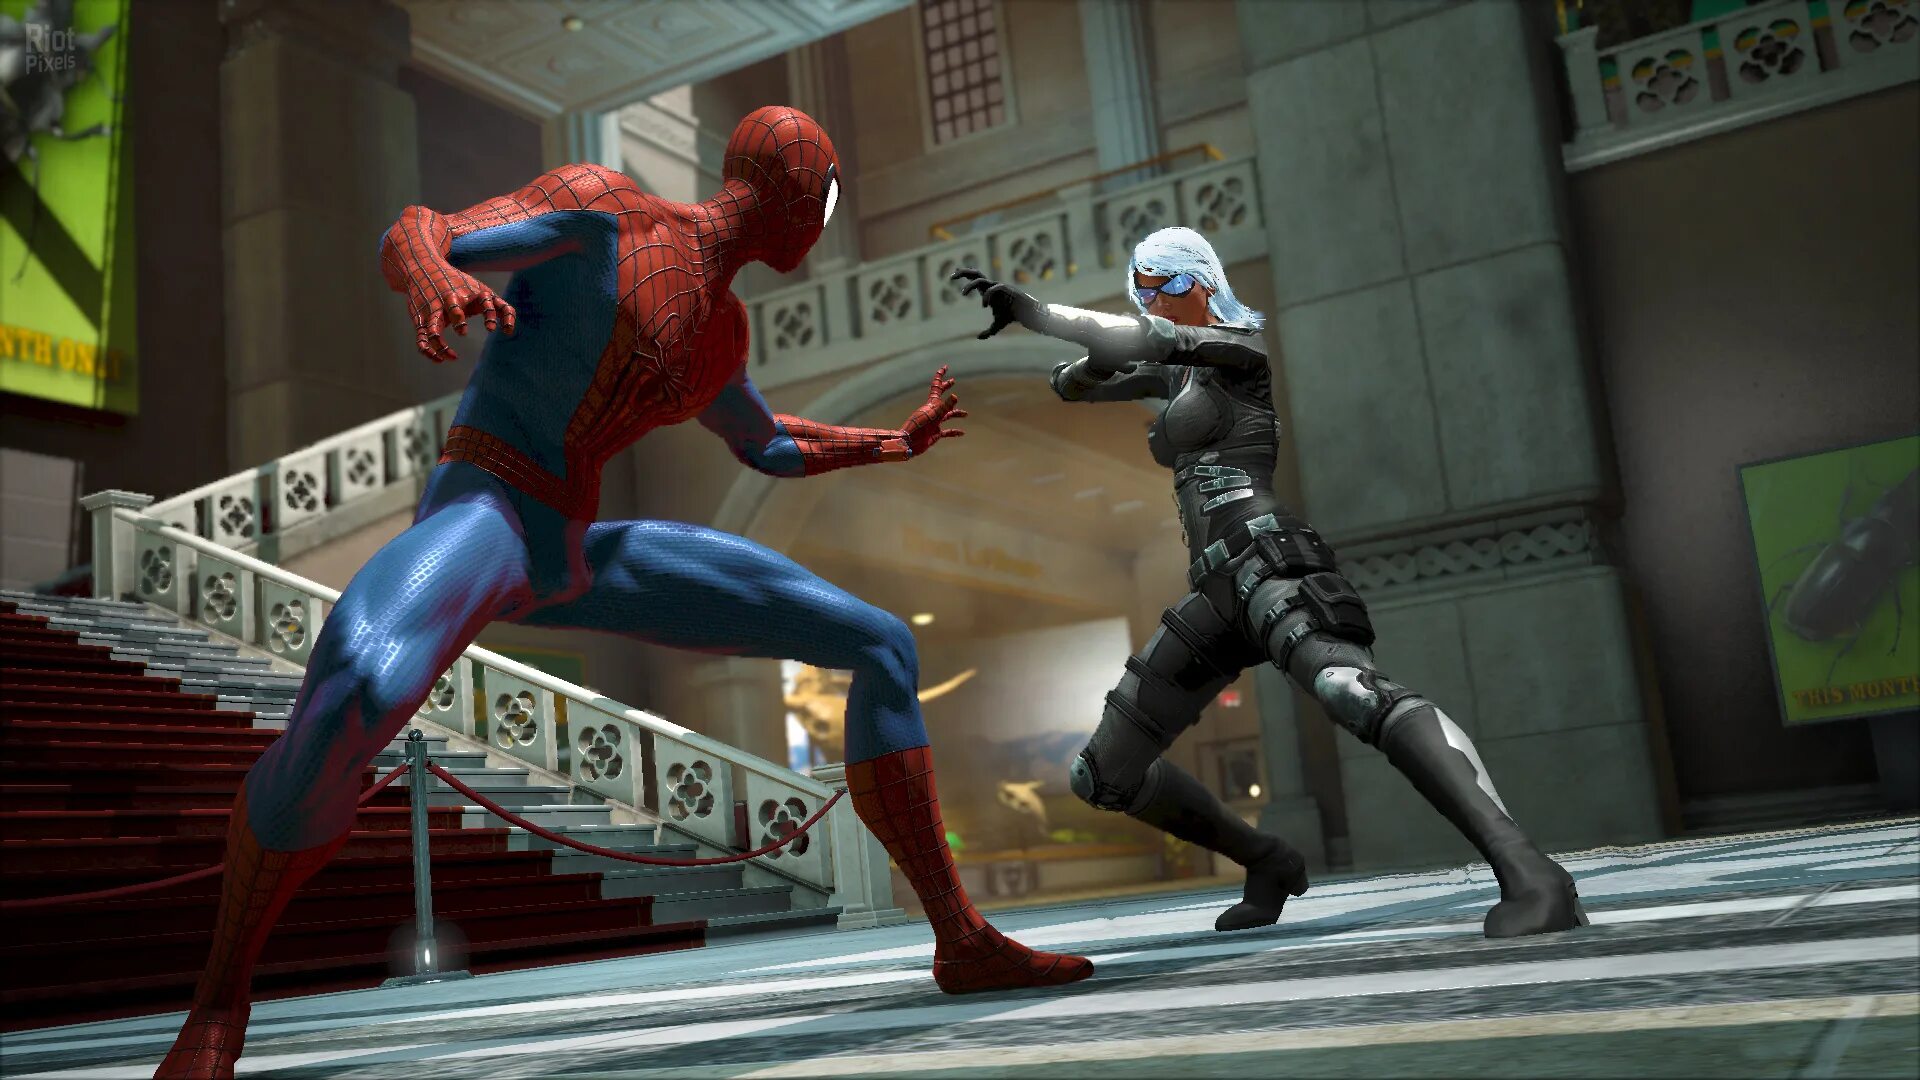 Spider man игра 2012. The amazing Spider-man 2 игра. Spider man 2014 игра. Новый человек паук 2 игра. Человек паук амазинг 2.